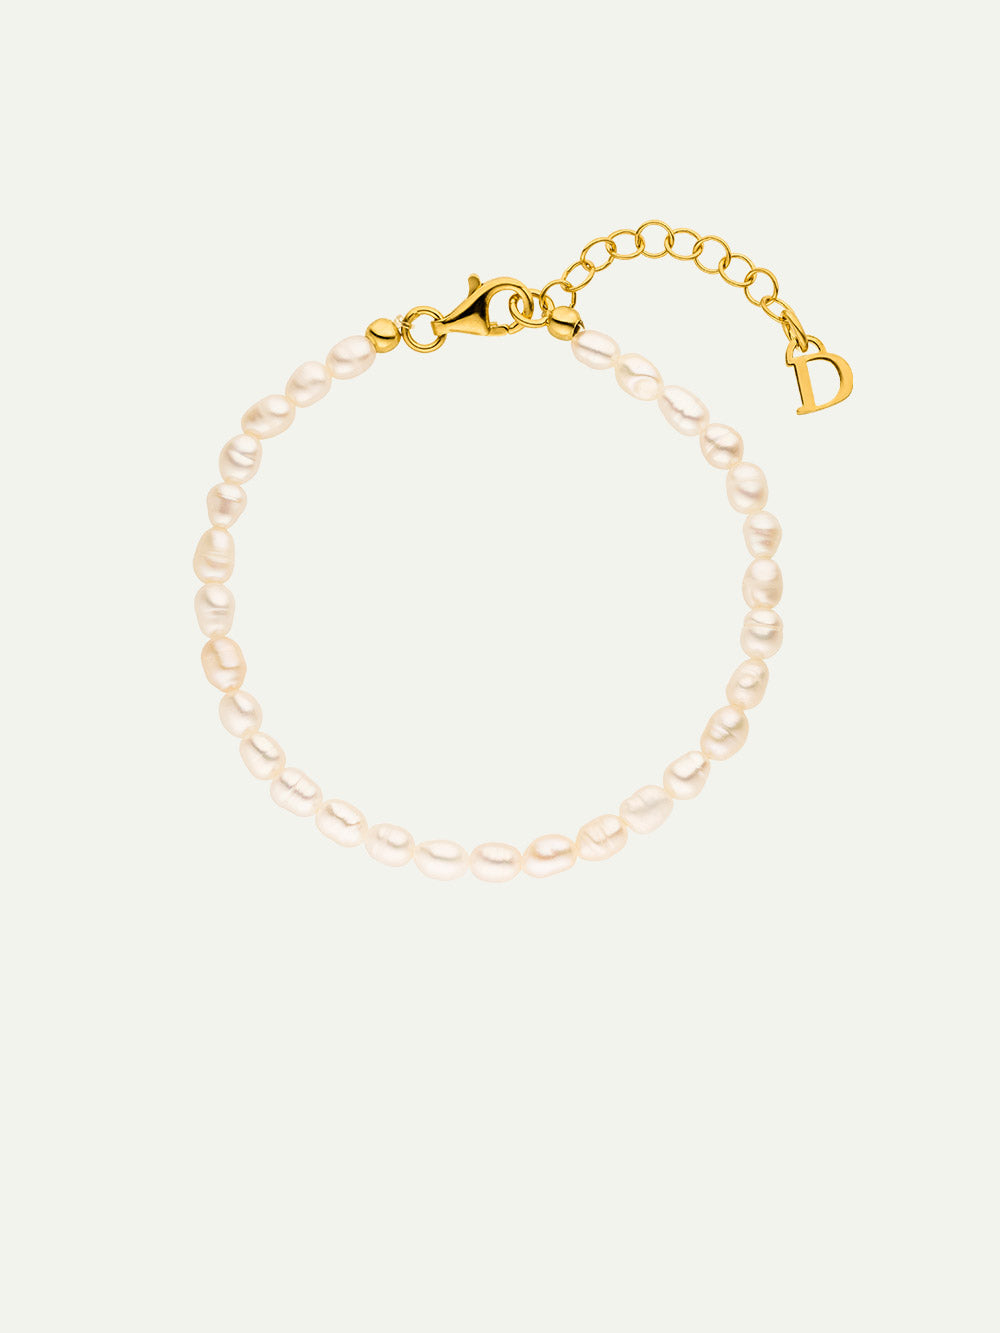 Pearl Bracelet Gold